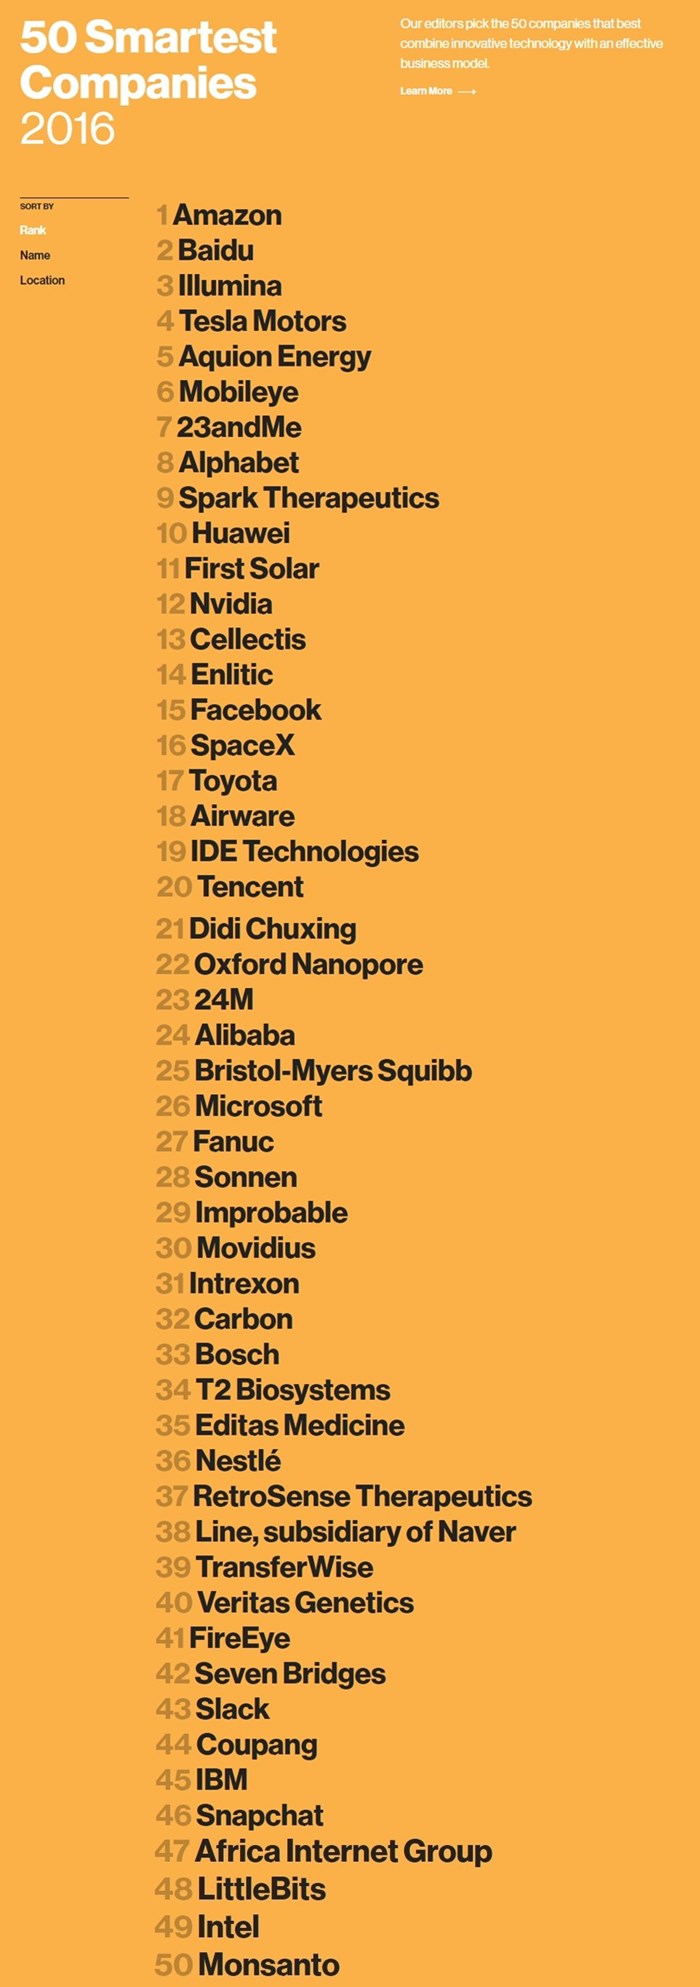 50 Smartest Companies 2016(1~50) resize.jpg